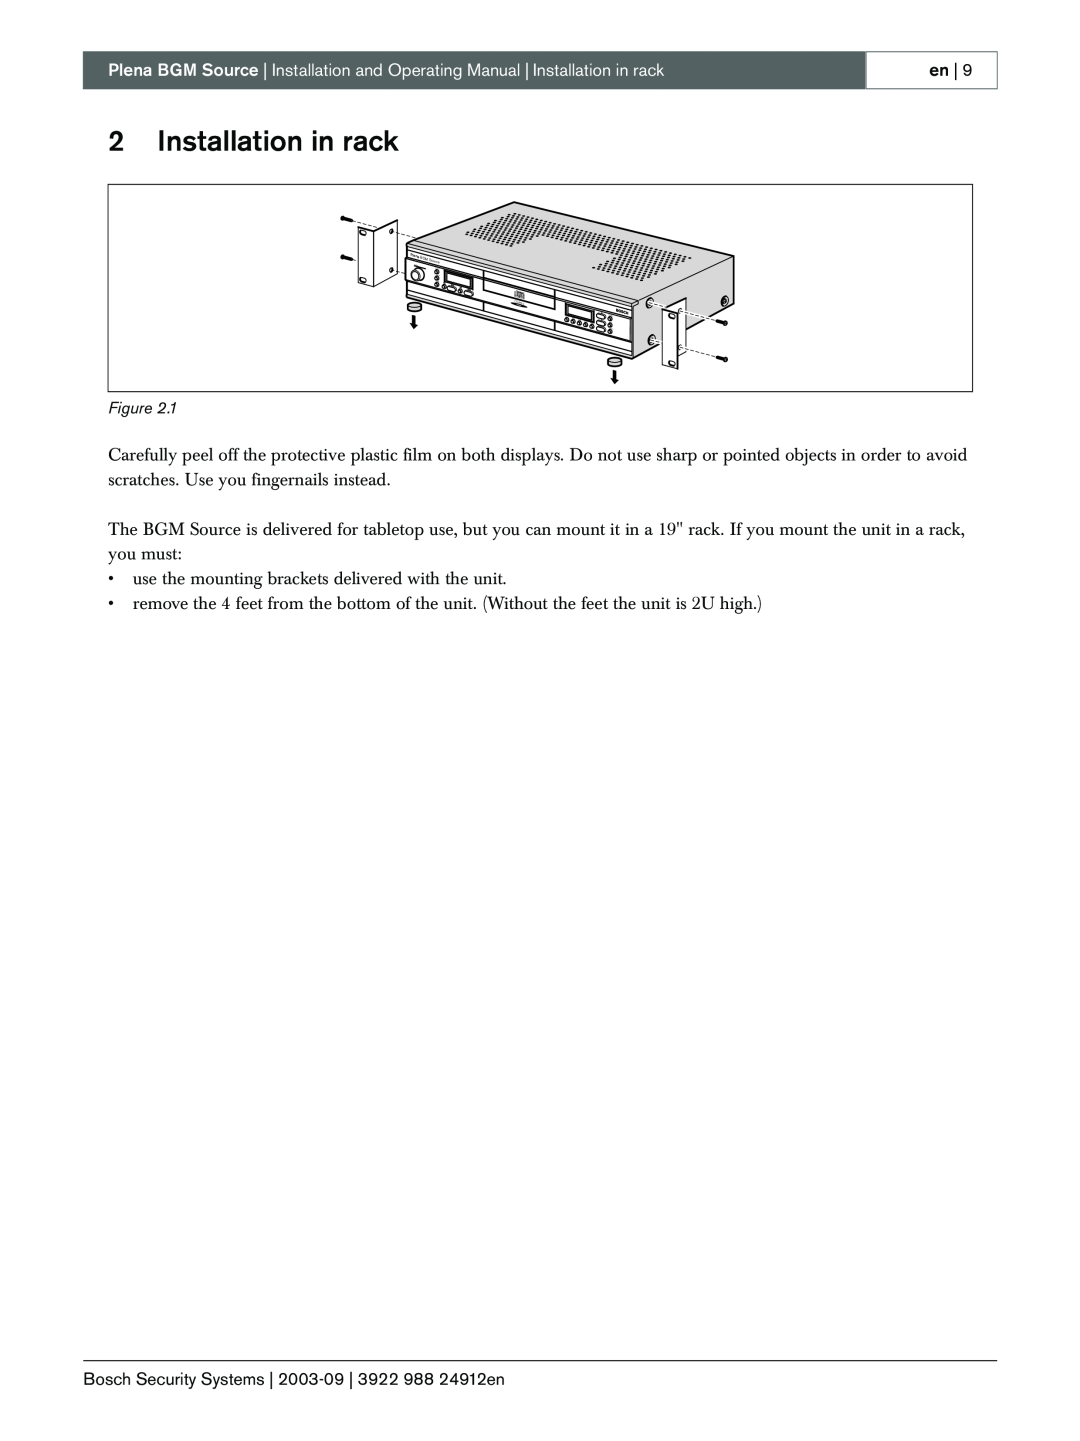 Bosch Power Tools LBB 1961 manual 2Installation in rack, Plena BGM Source 